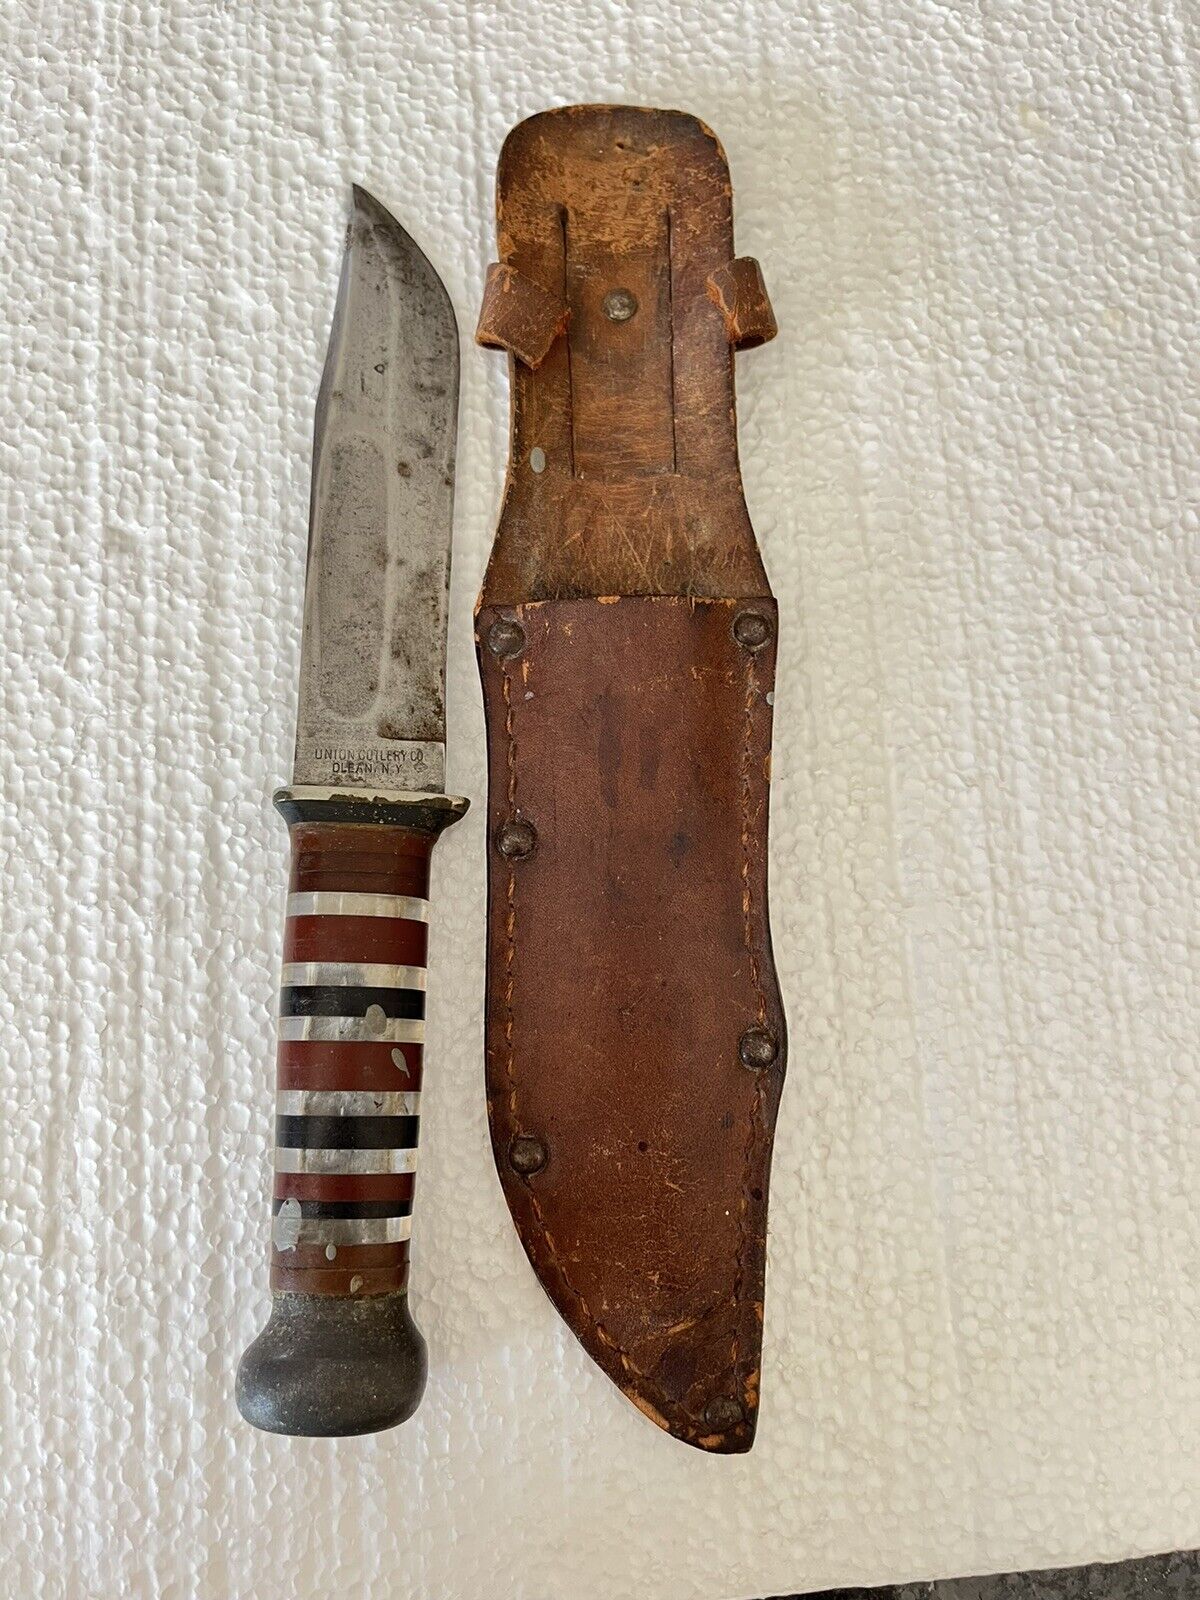 Vintage KA-BAR Union Cutlery Co. Olean NY Hunting Knife Unique Handle